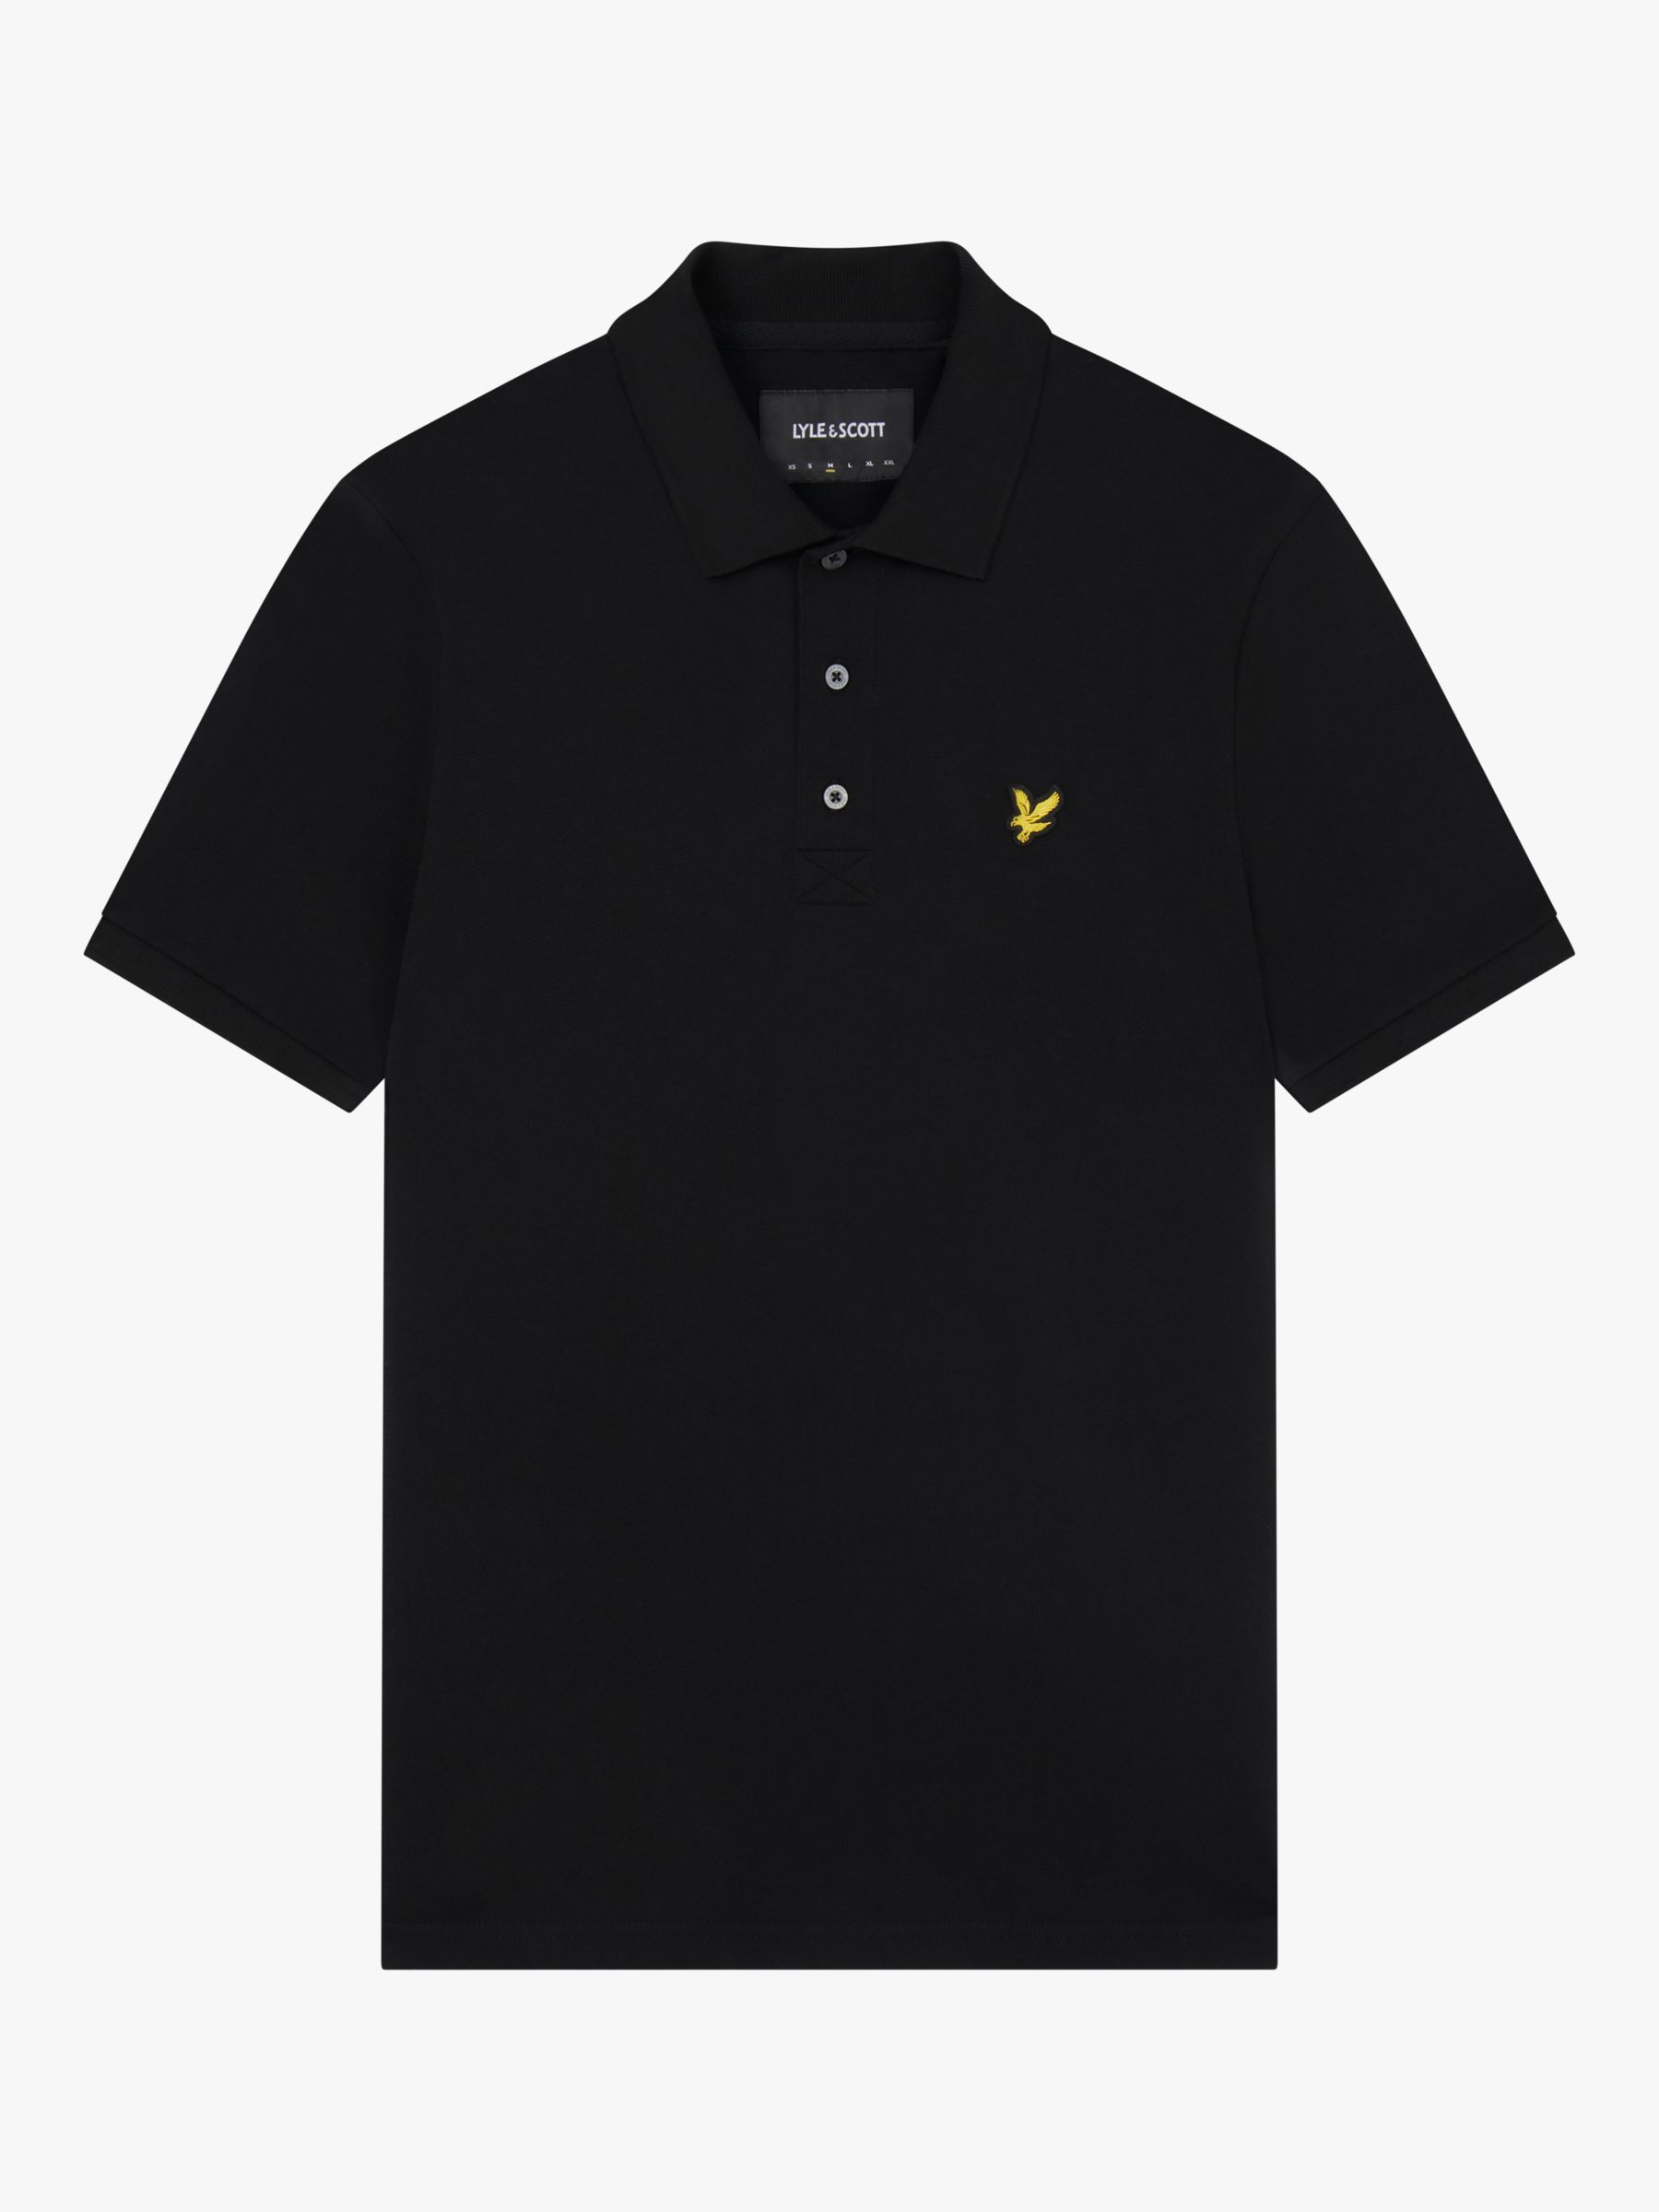 Lyle & Scott Short Sleeve Polo Shirt, Jet Black at John Lewis & Partners